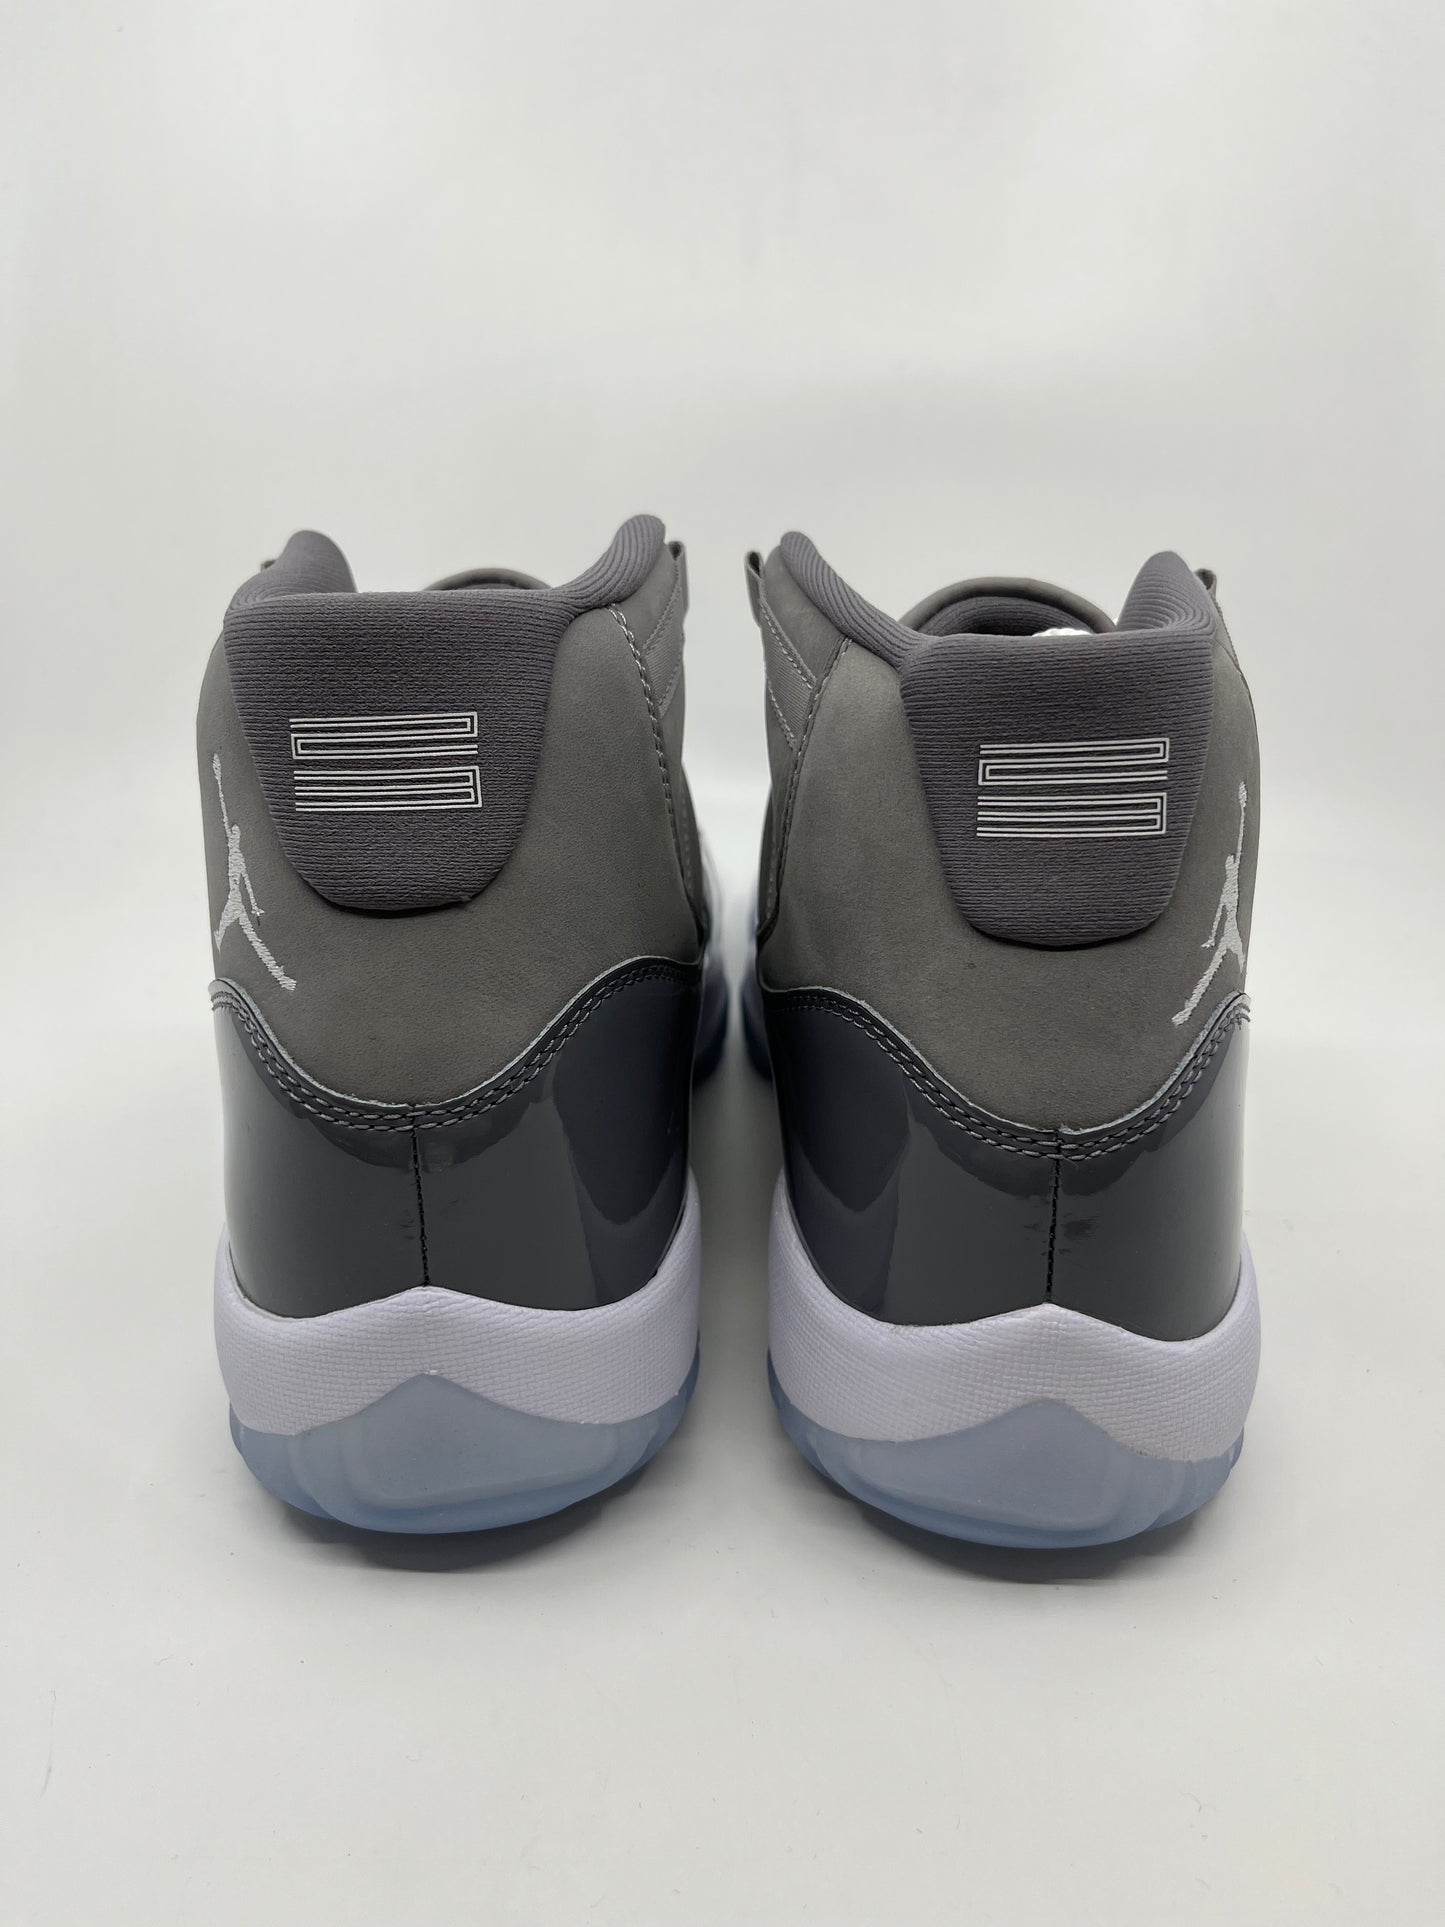 Jordan 11 Cool grey Size 10.5 New